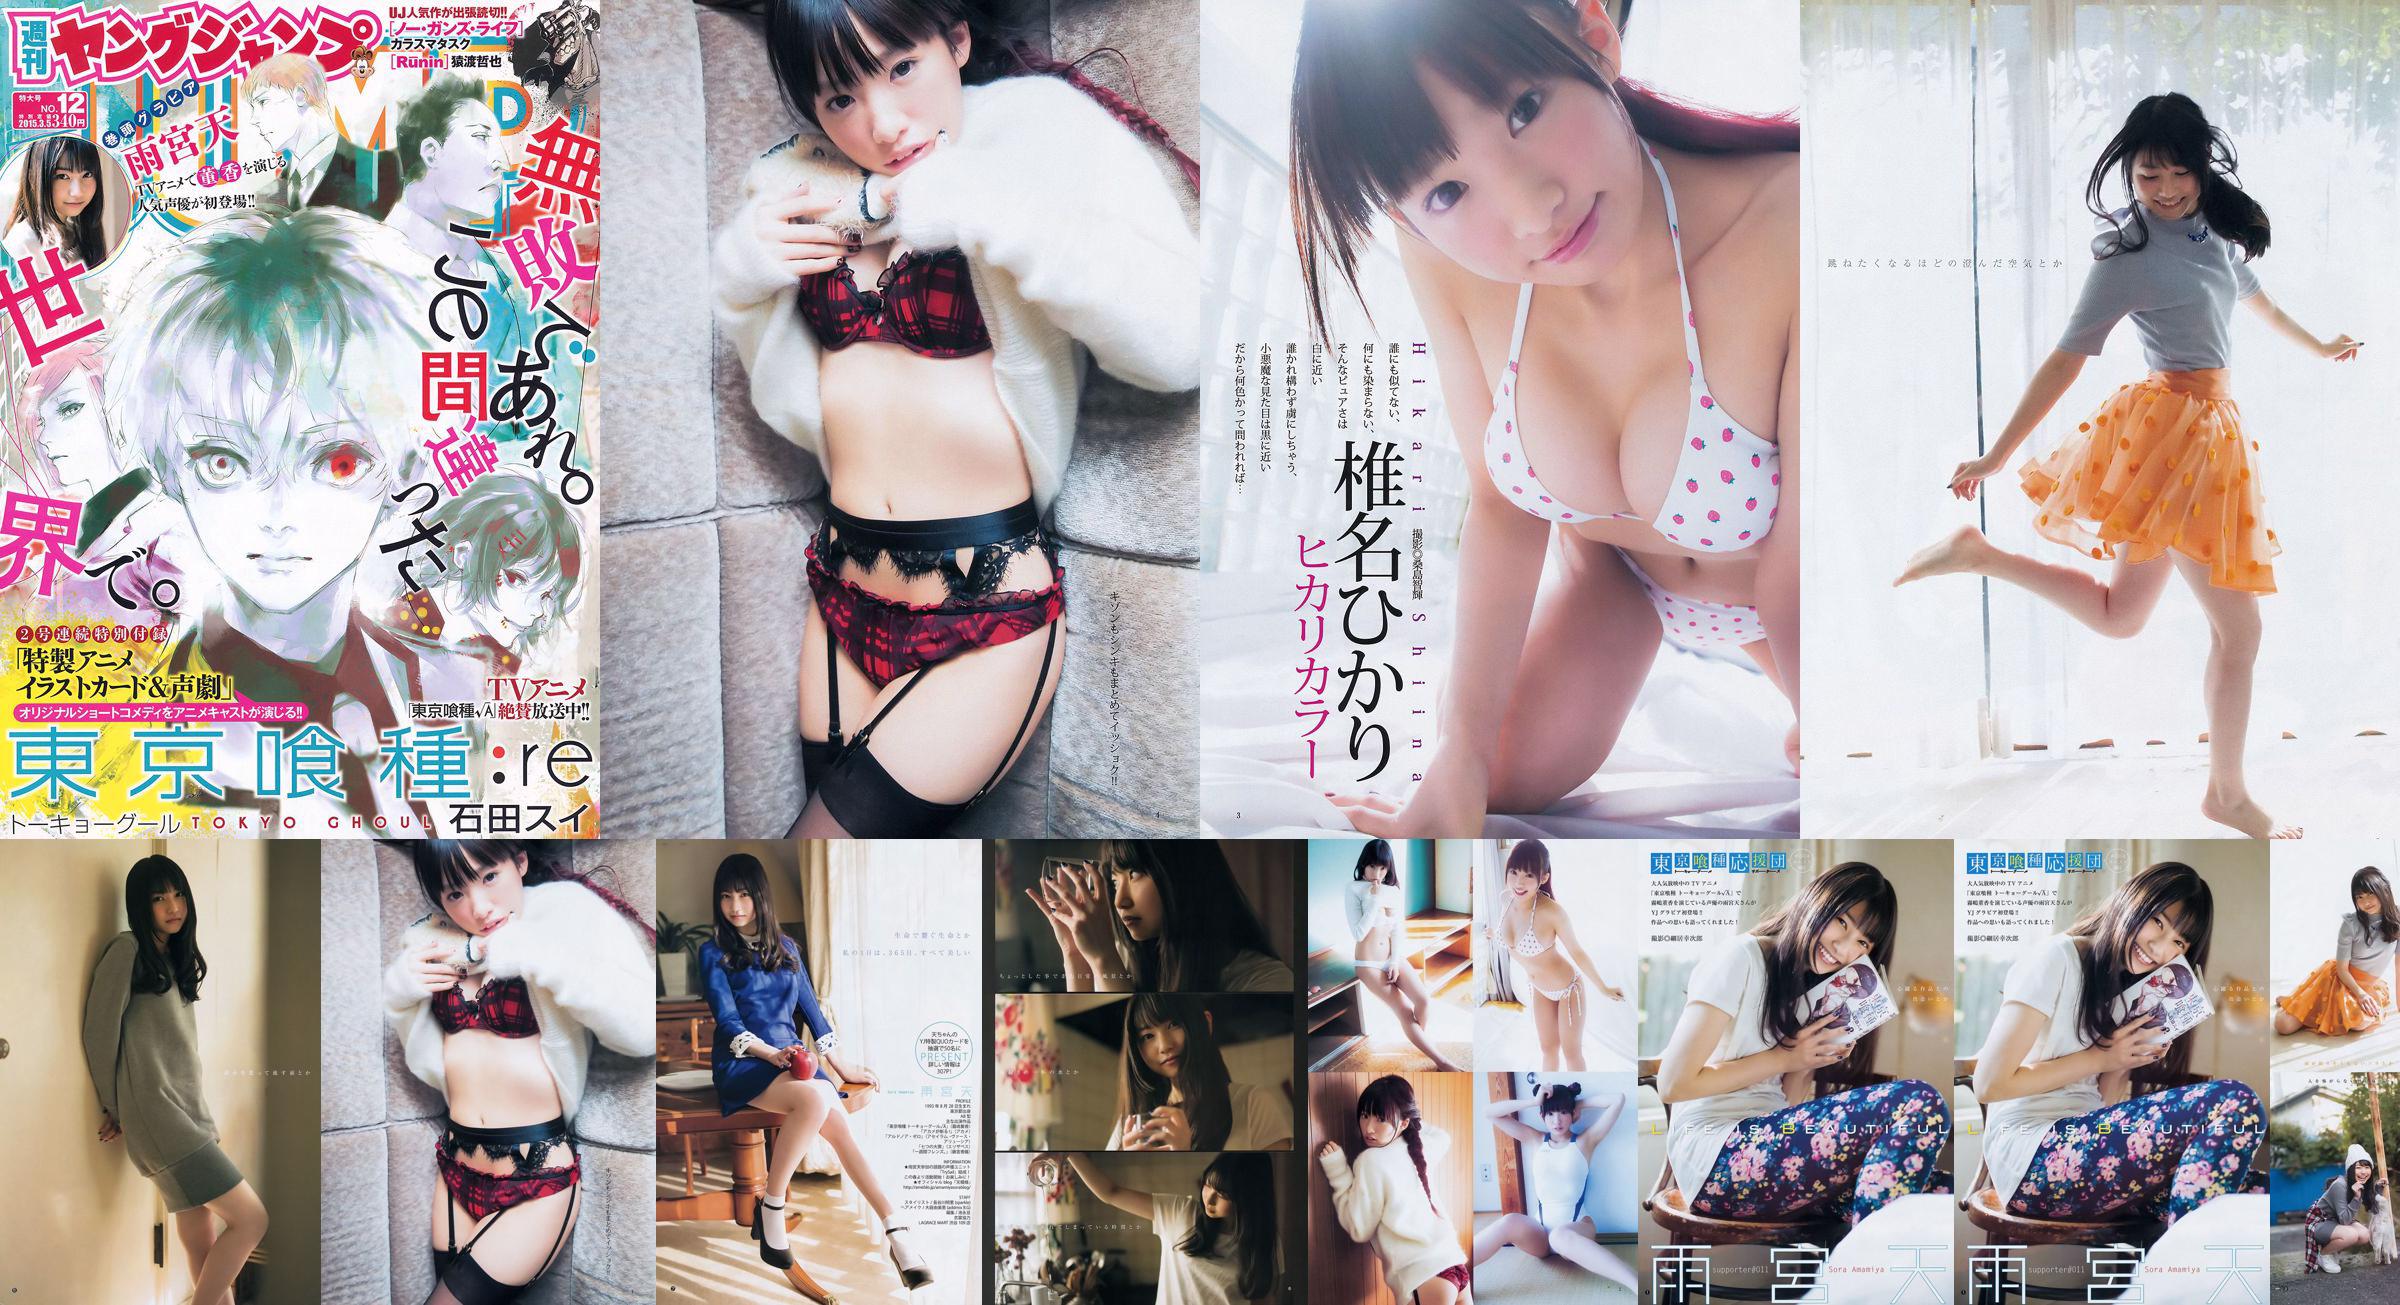 Amamiya Tian Shiina ひ か り [Jeune saut hebdomadaire] 2015 n ° 12 Photo Magazine No.653c64 Page 1